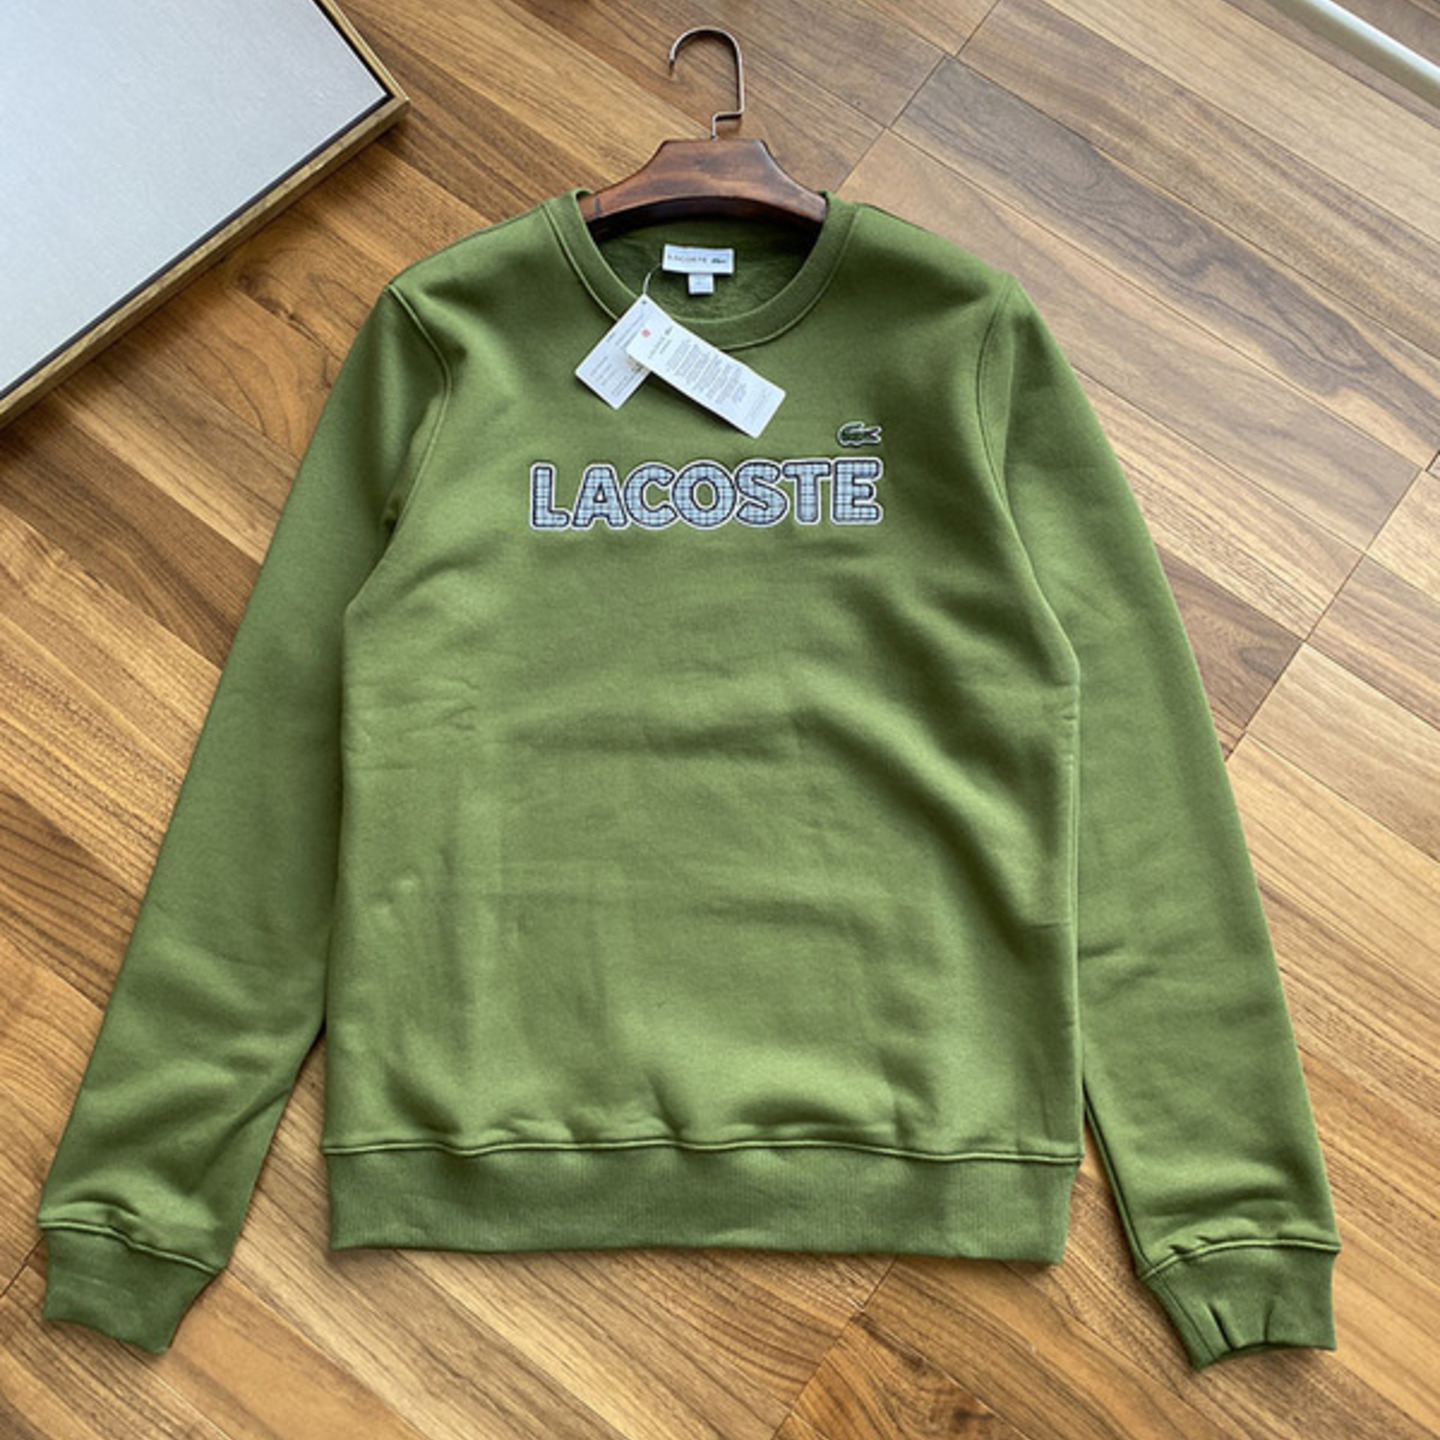 Lacoste cotton sweater